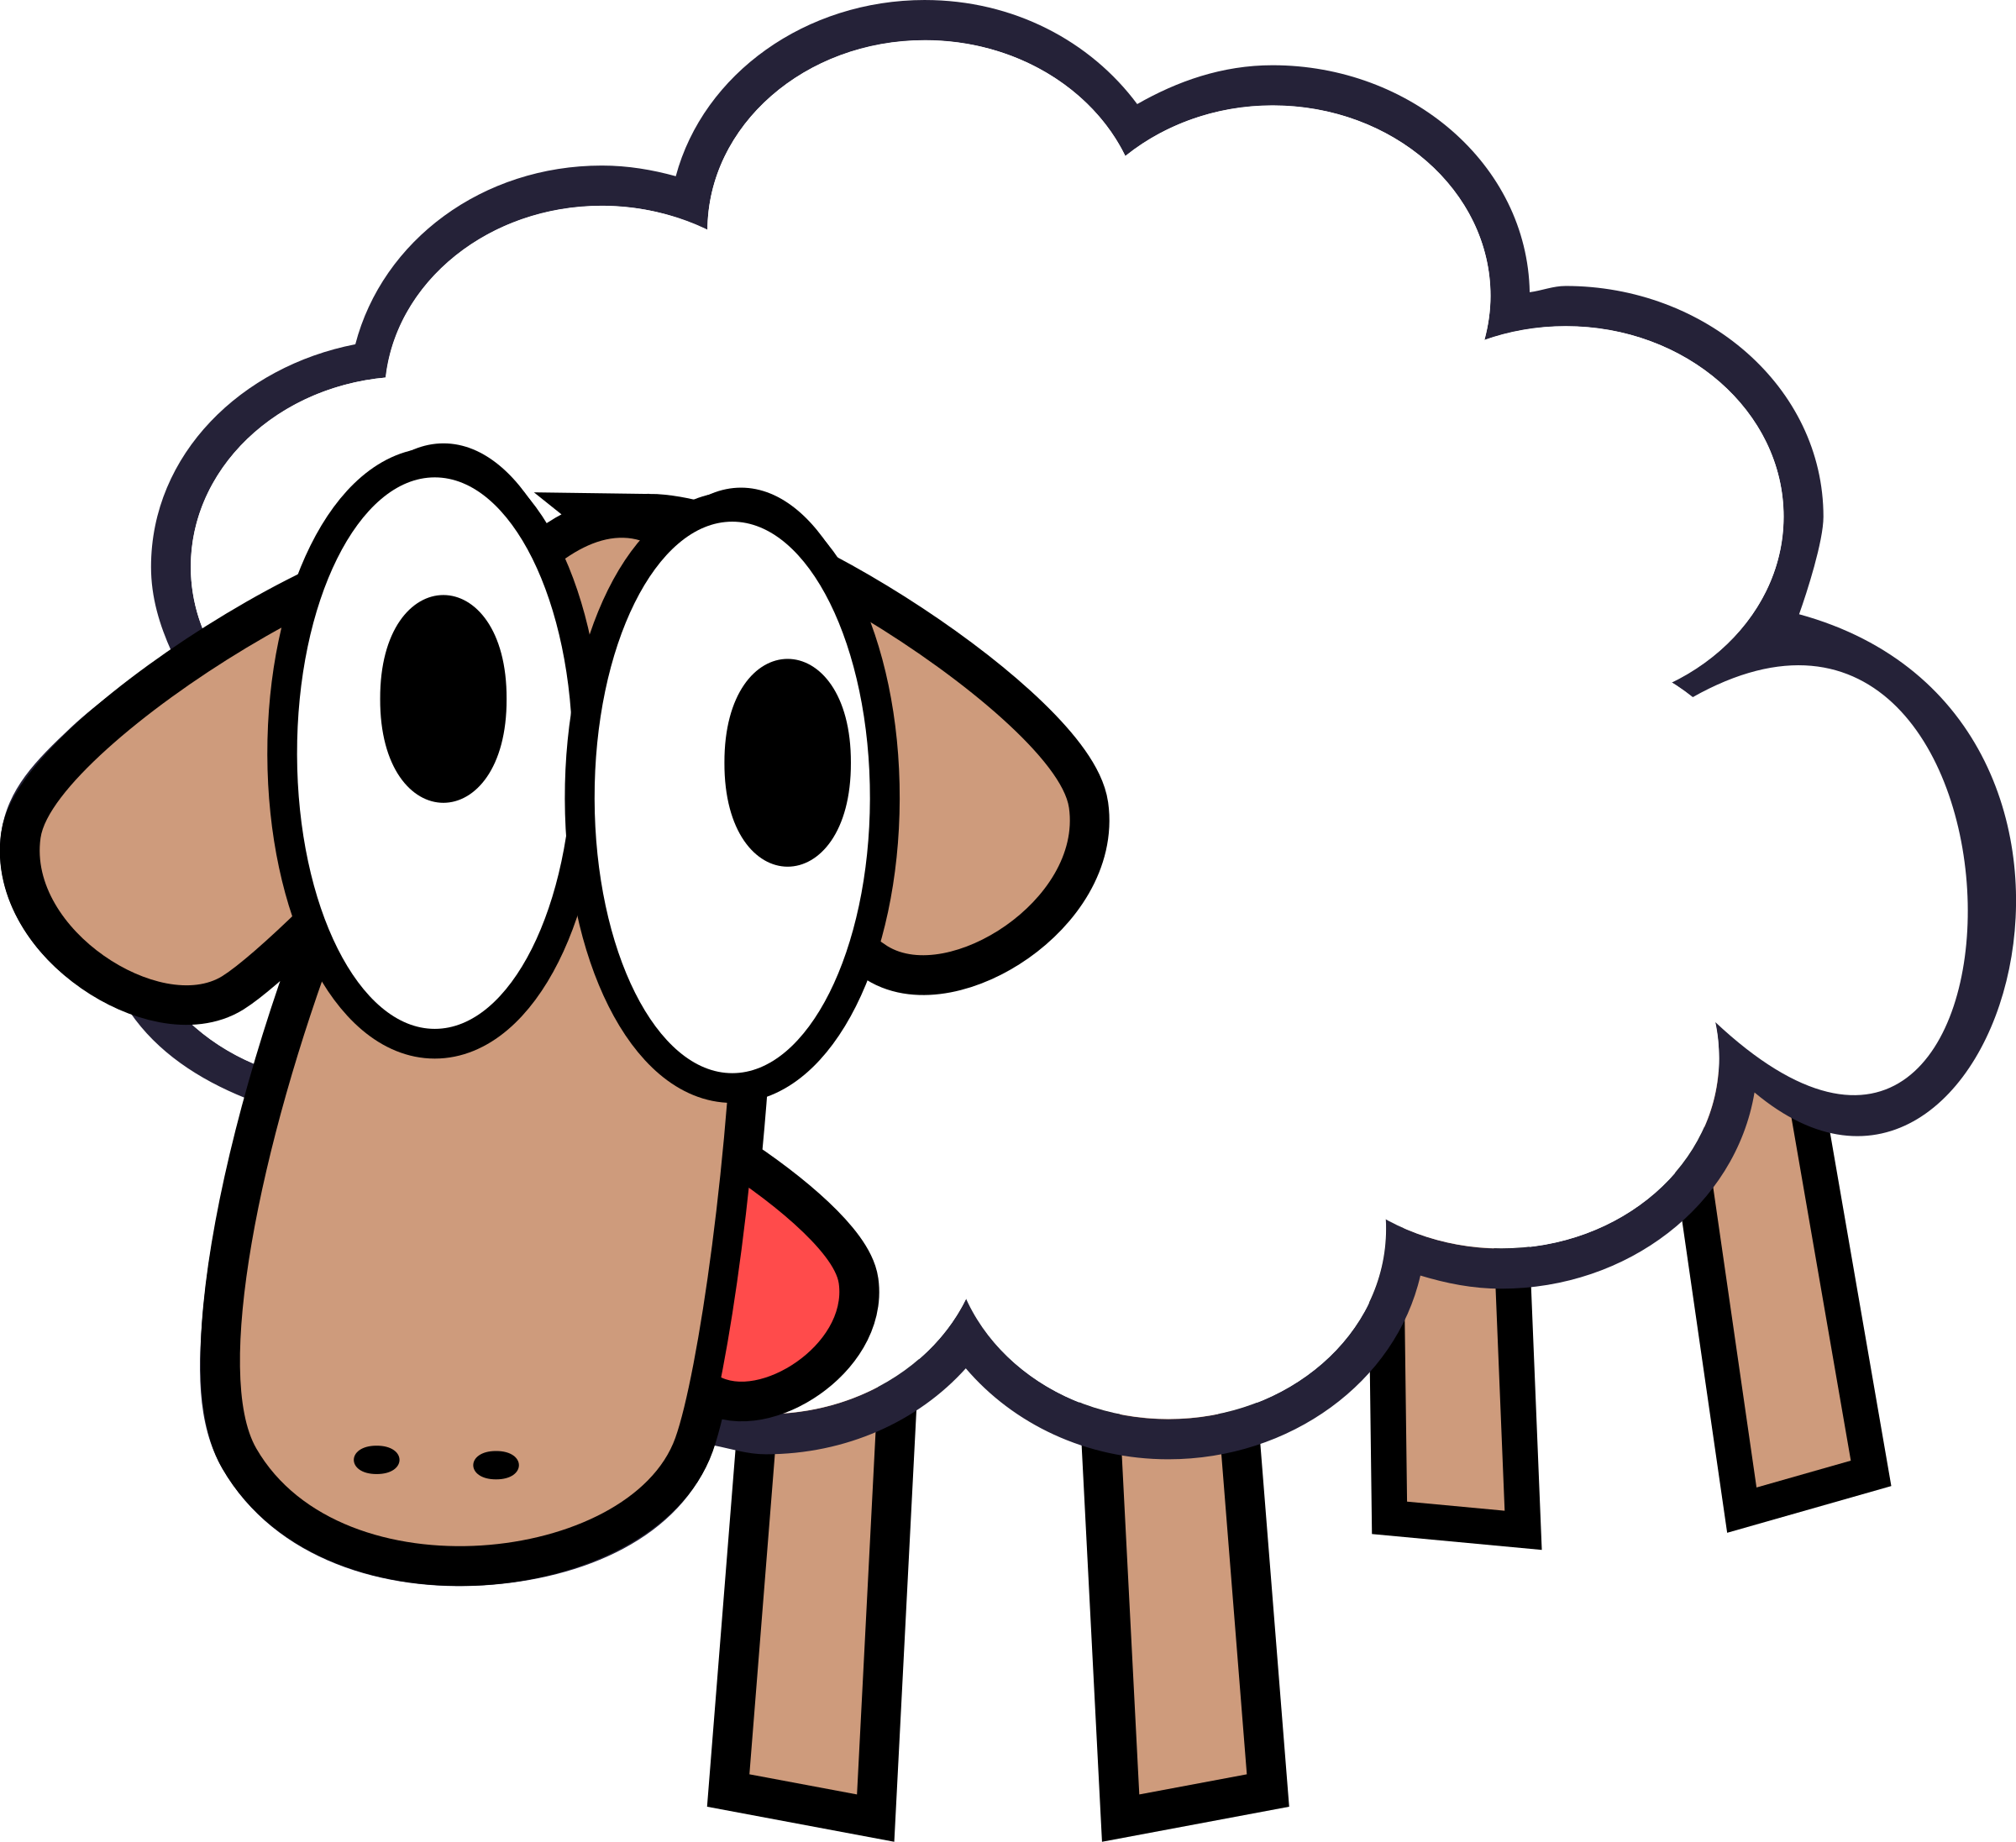 Big Image (Png) - Sheep Cartoon, Transparent background PNG HD thumbnail